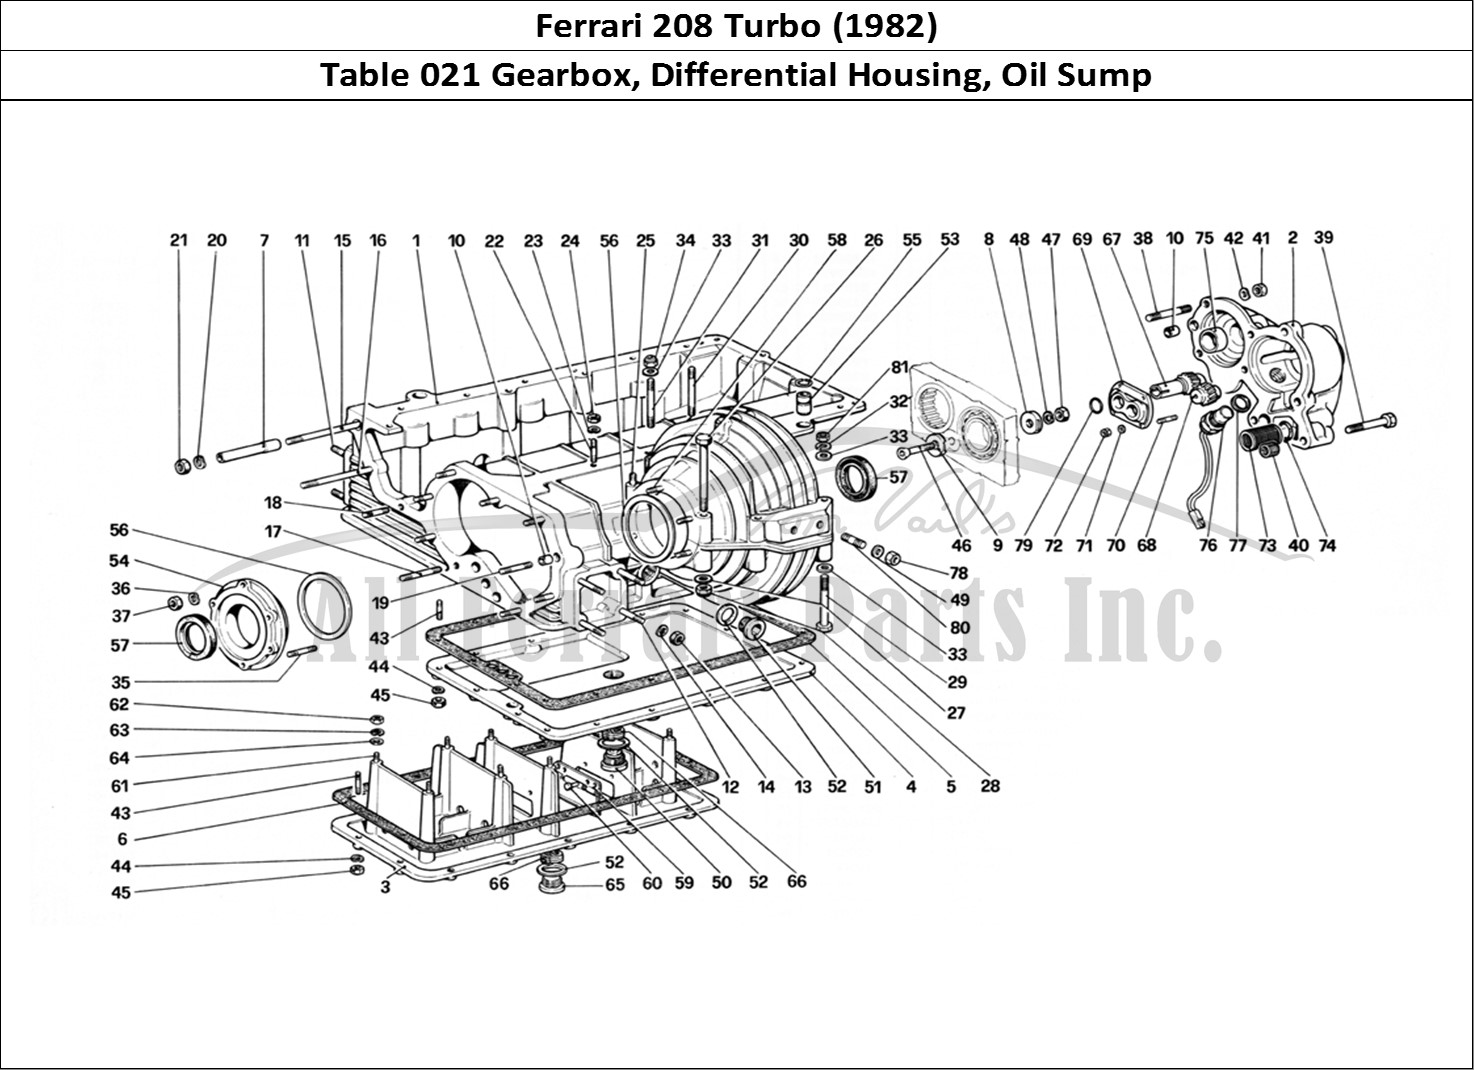 Ferrari Parts Ferrari 208 Turbo (1982) Page 021 Gearbox - Differential Ho